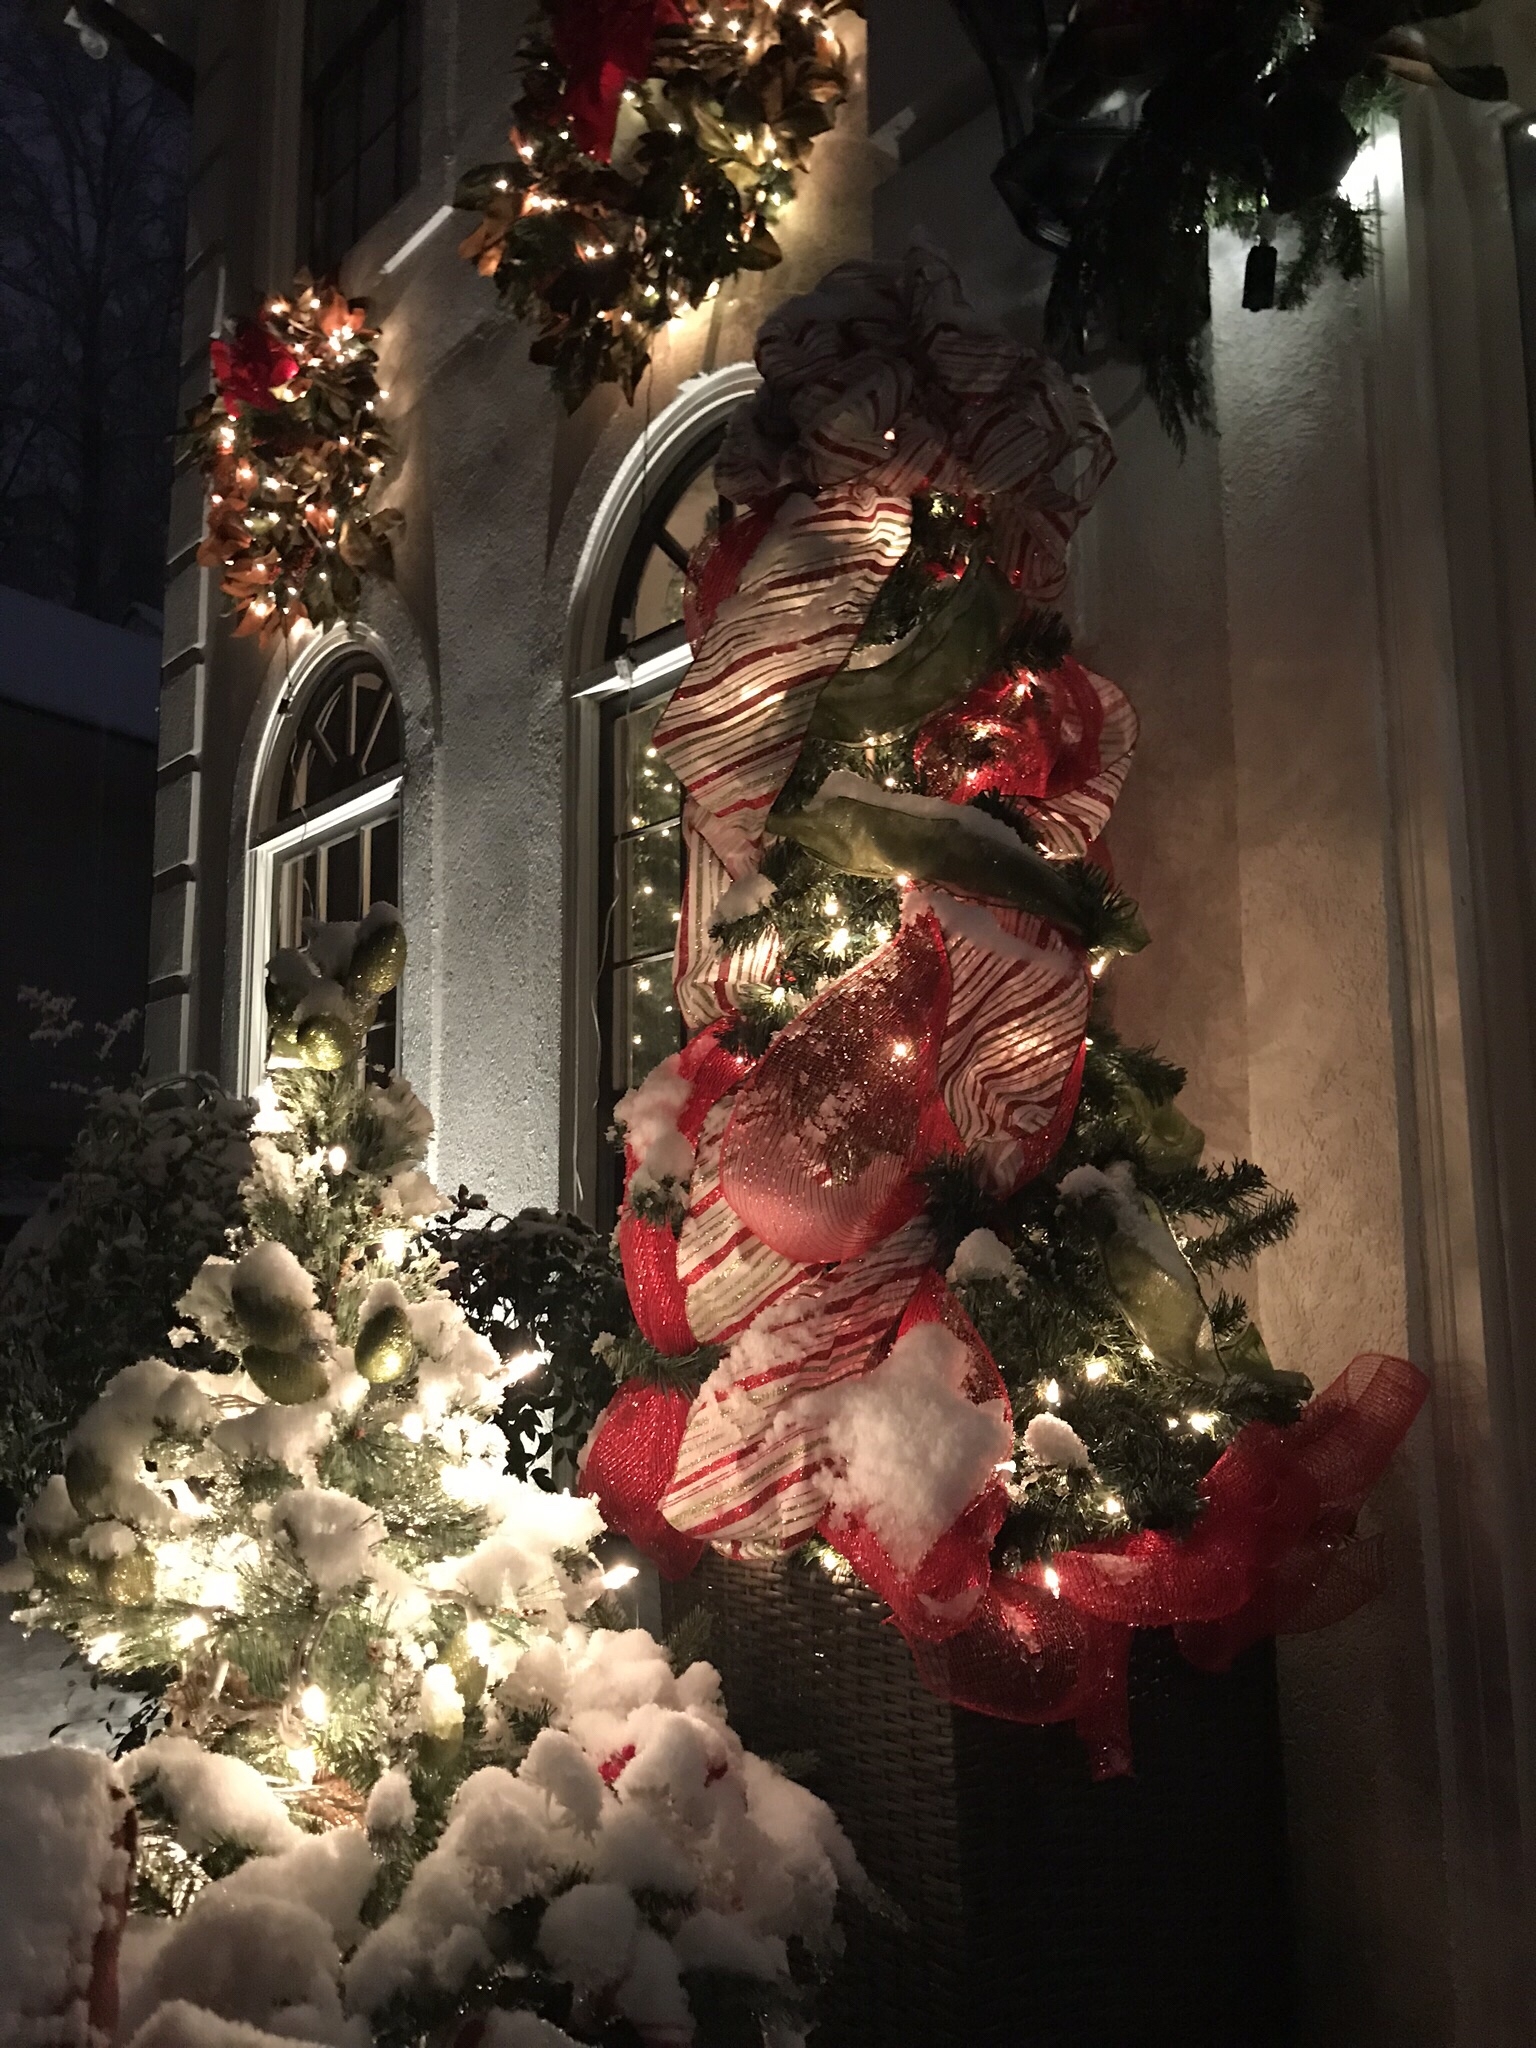 Christmas wreath, magnolia decor, magnolia wreaths, diy wreaths, outdoor wreaths, magnolia leaves